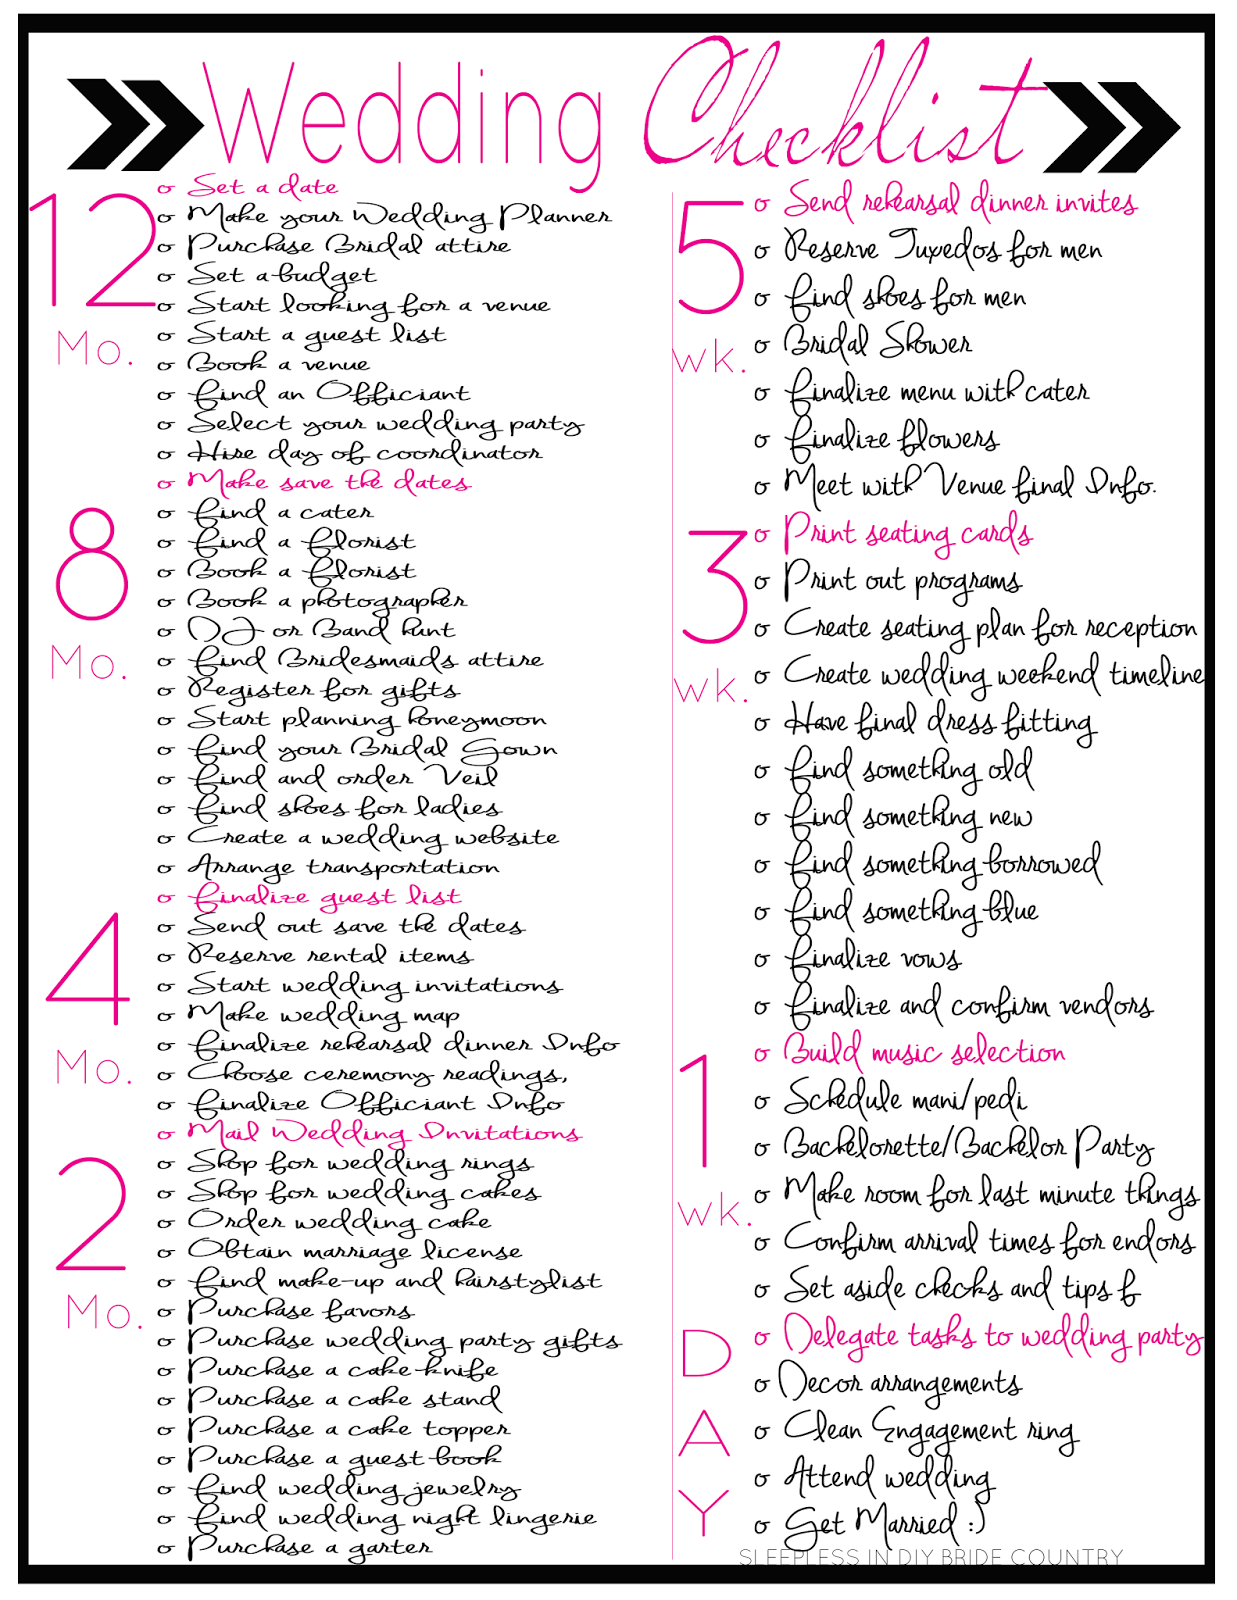 Wedding+checklist